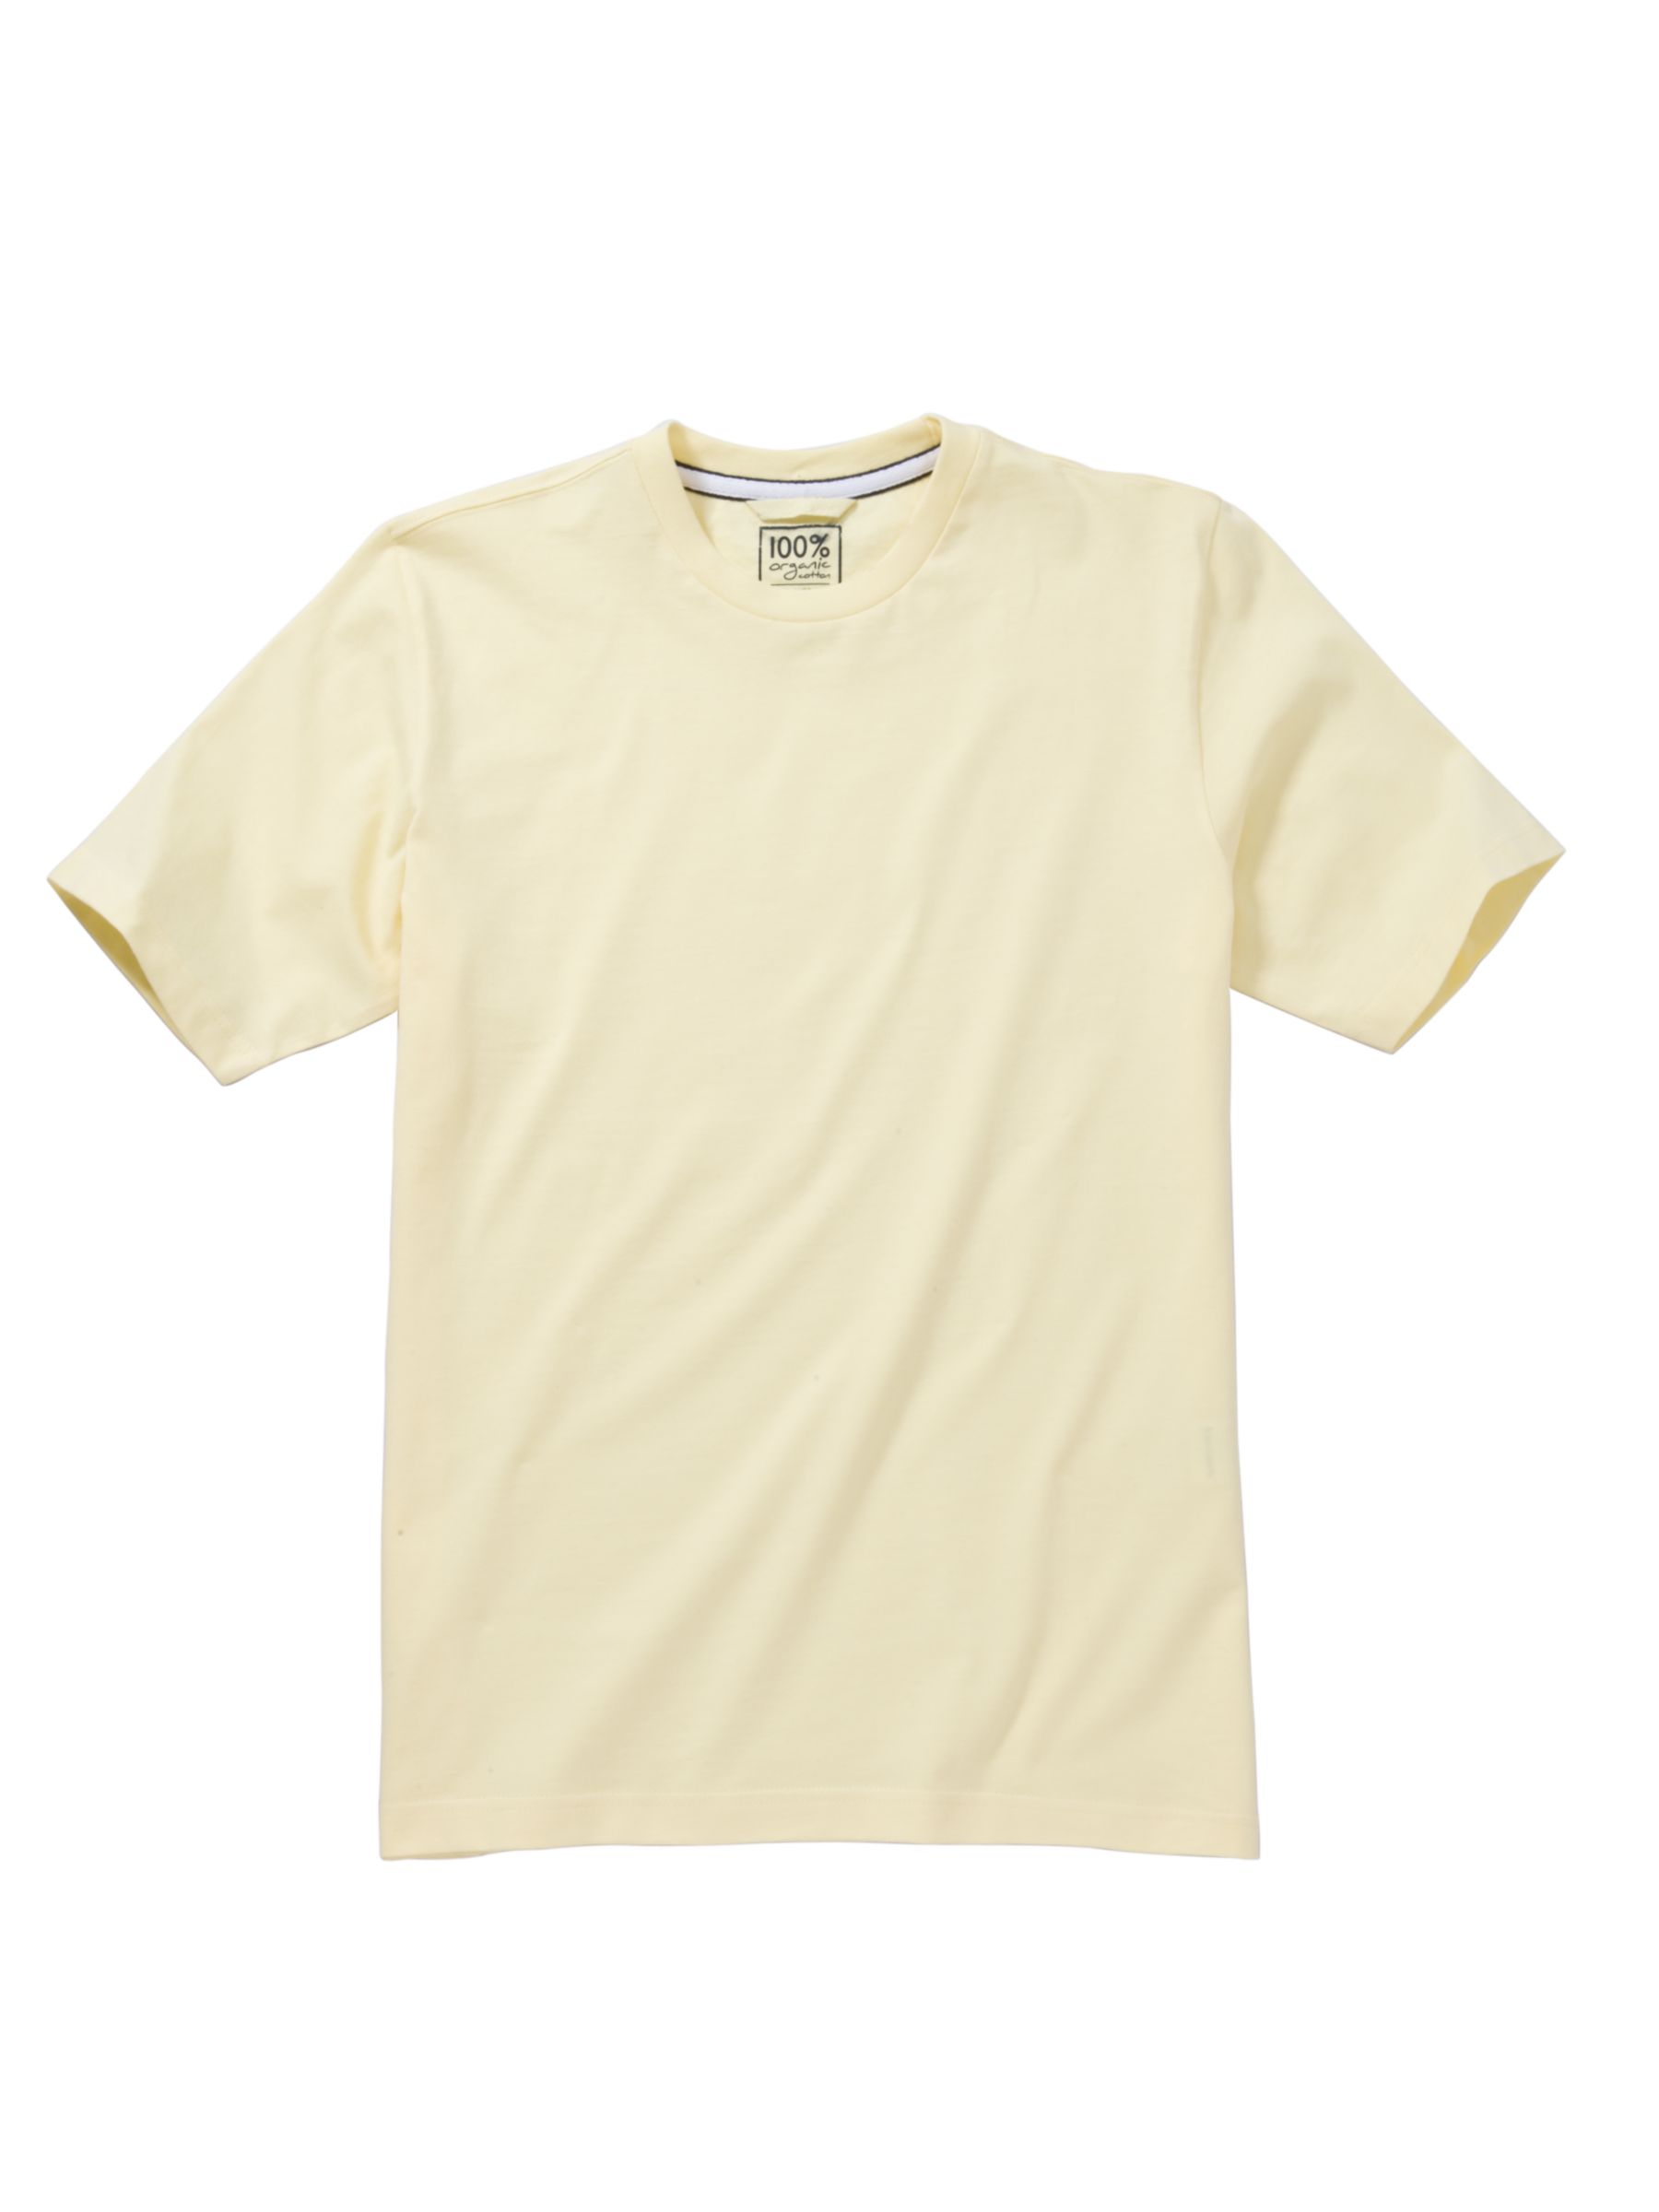 Organic Cotton T-Shirt, Yellow